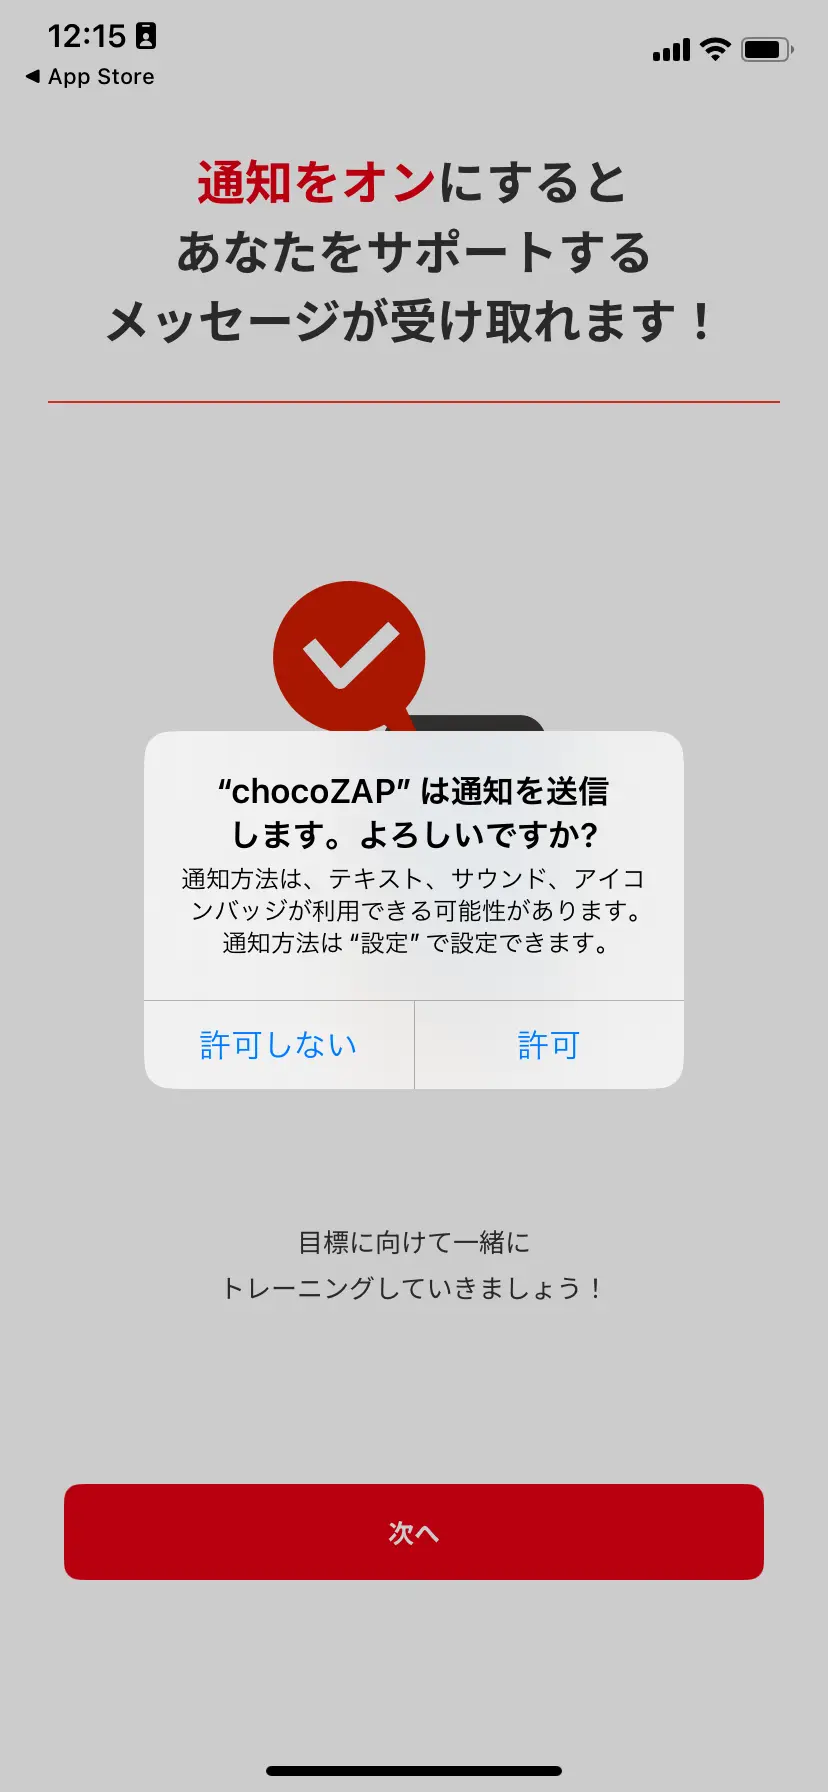 chocozap-app画面7